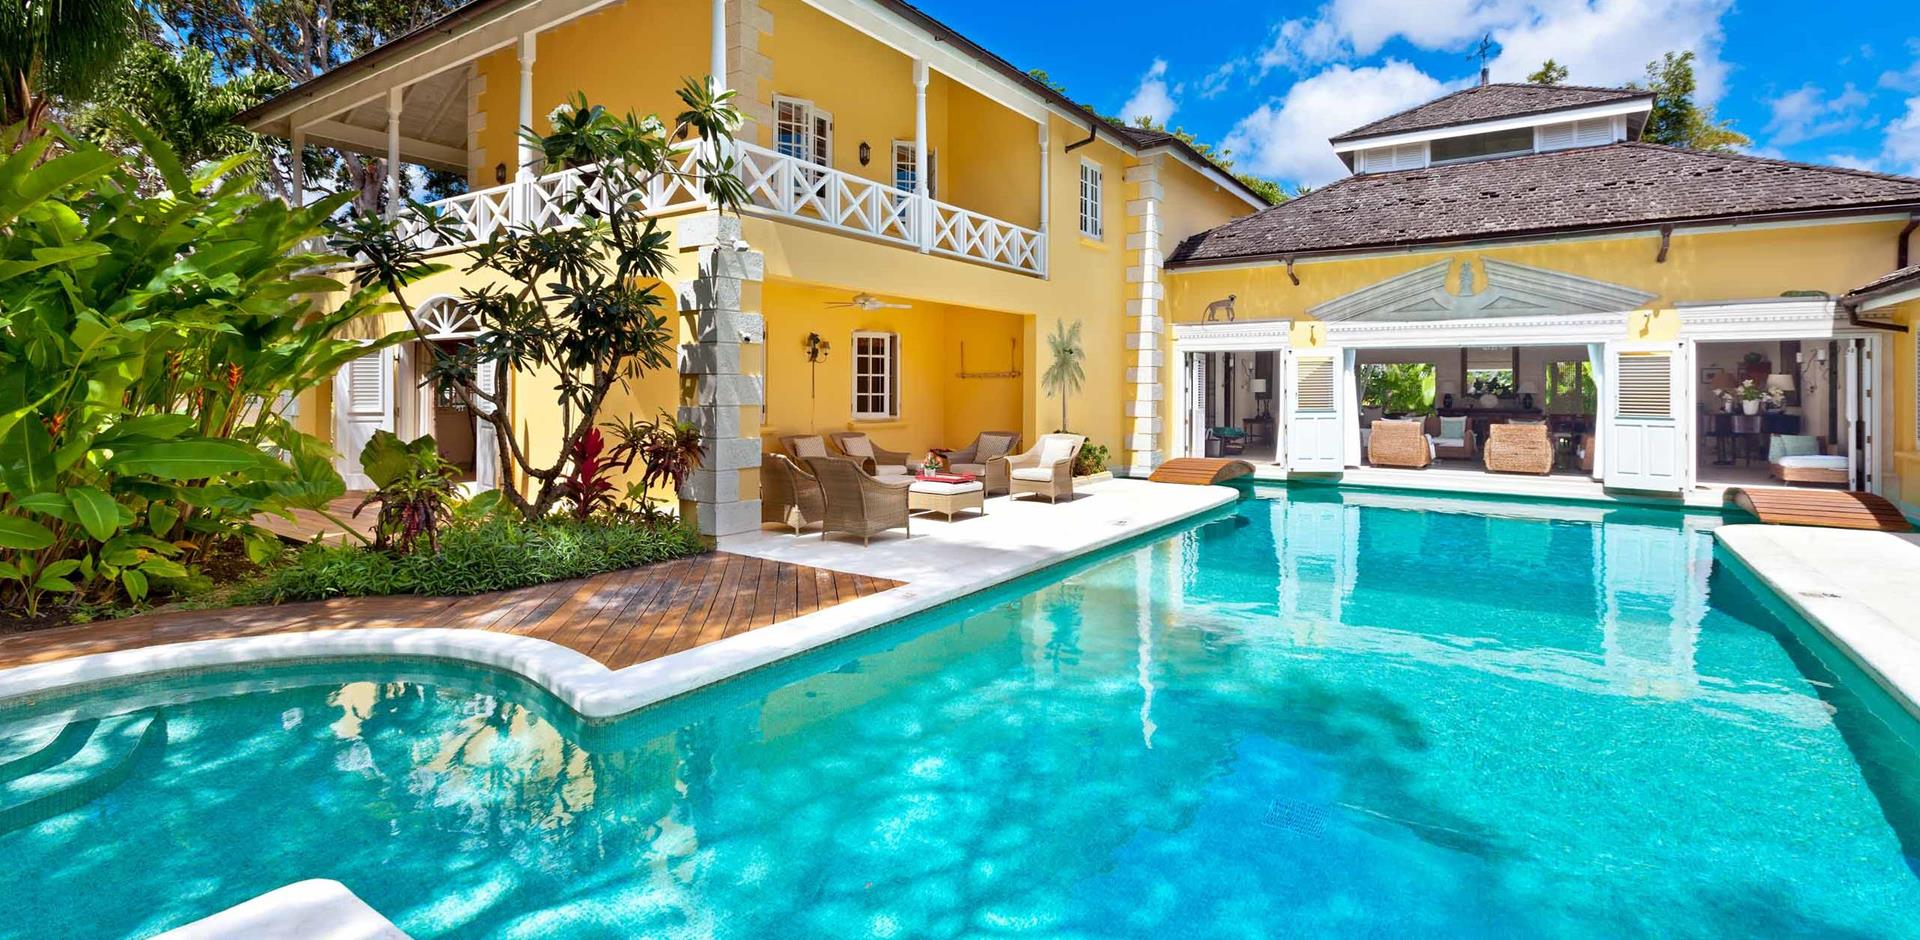 Pool area, Saffron House, Barbados, Caribbean